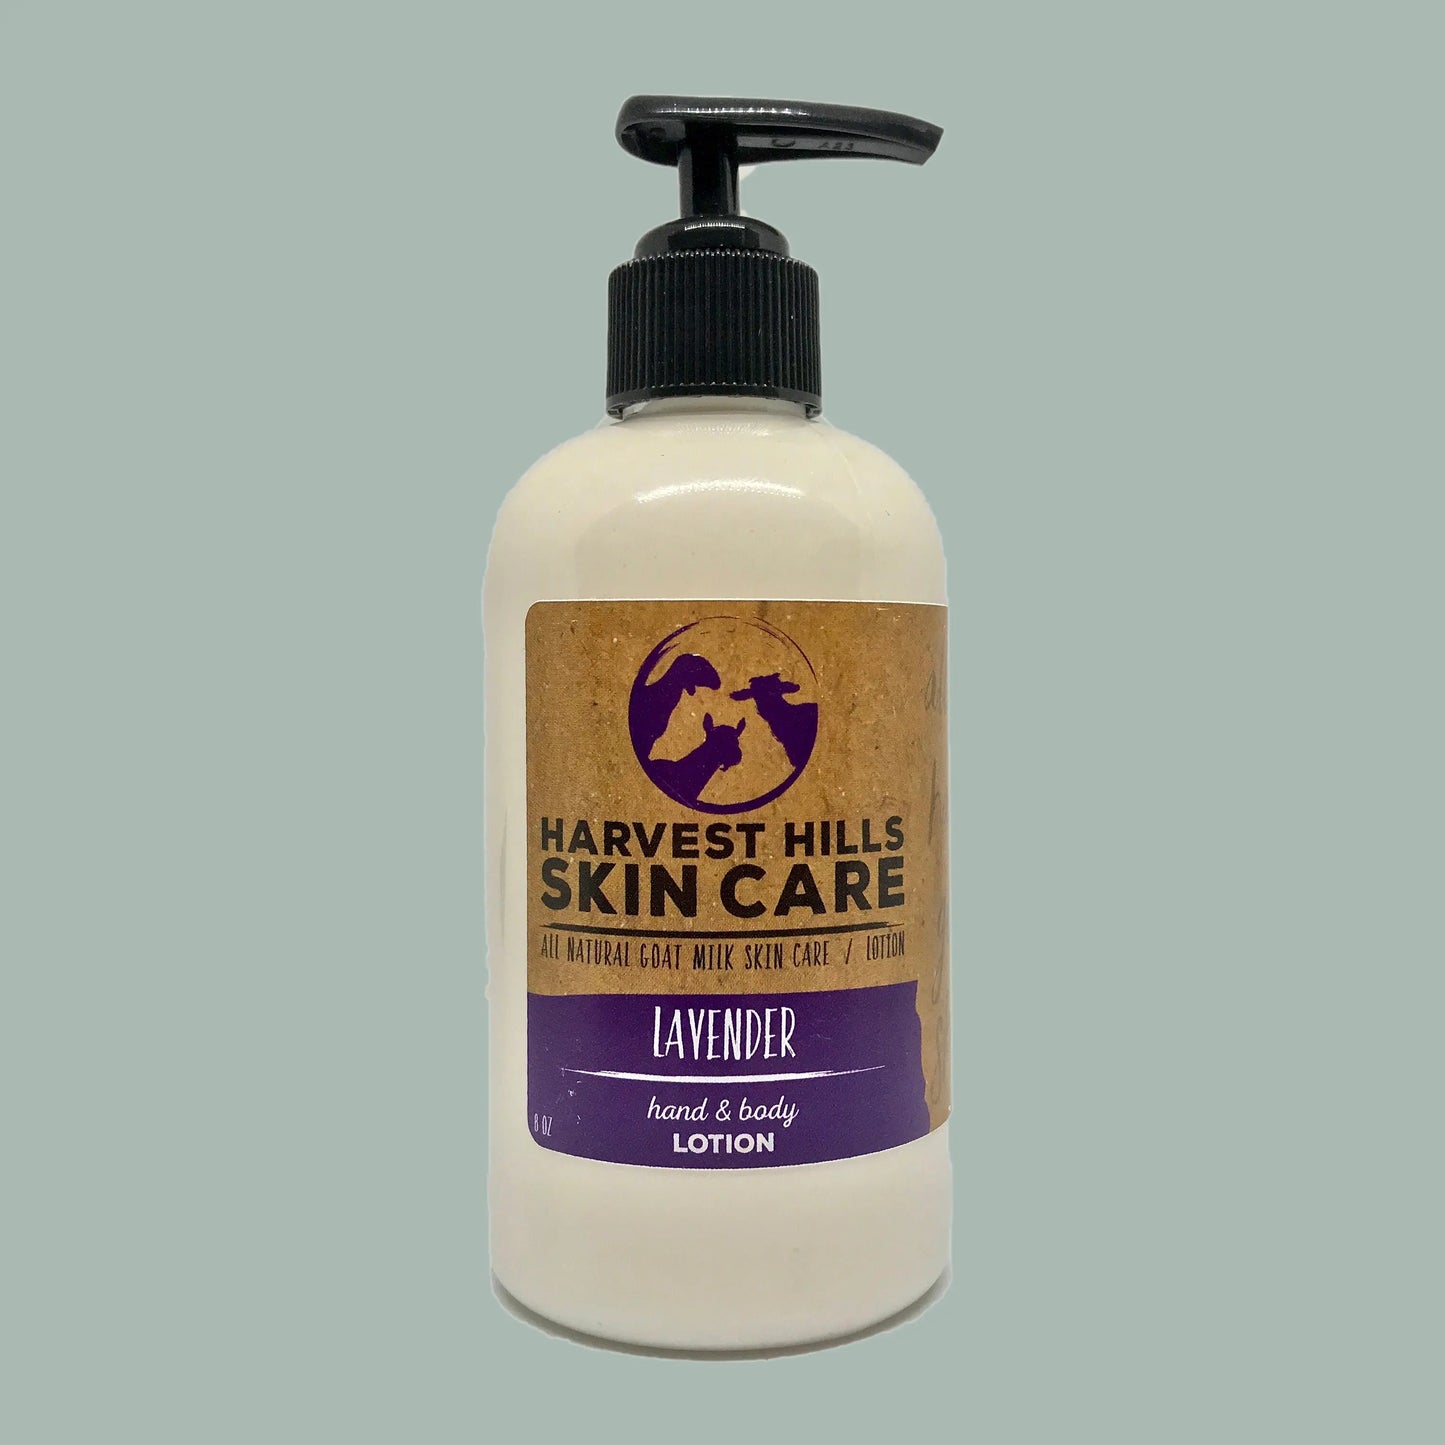 Lavender Hand & Body Lotion Harvest Hills Skin Care All Natural Goat Milk Skin Care